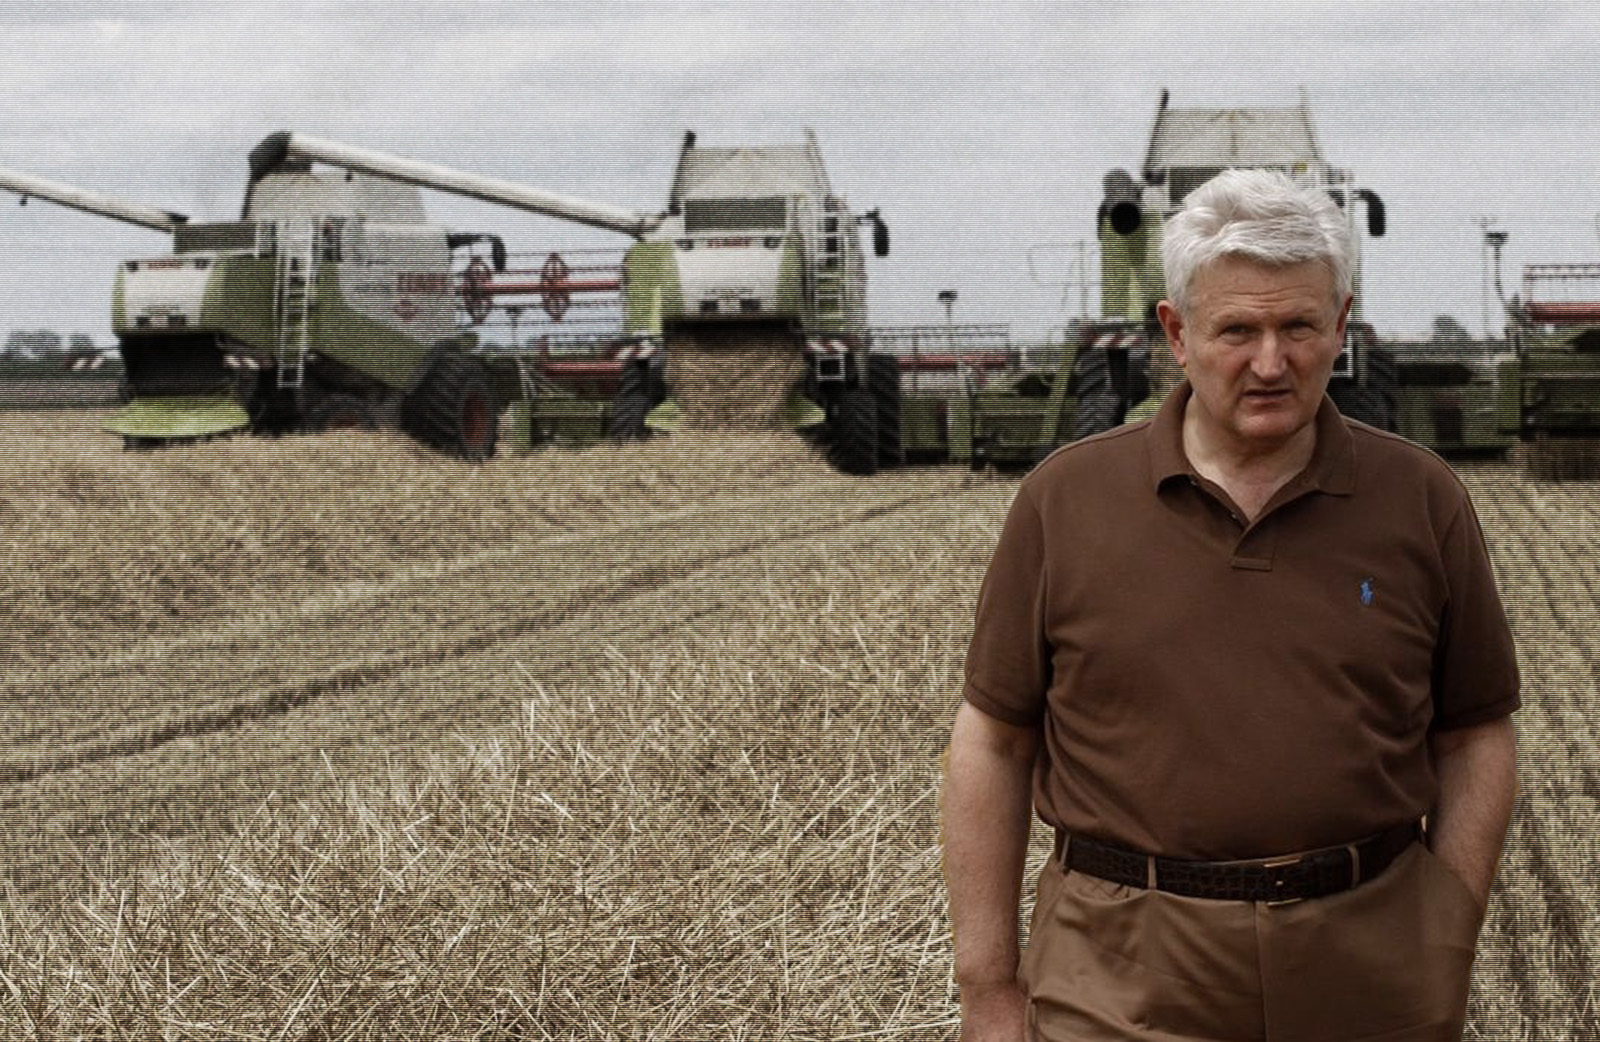 04.07.2001., Knezevo - Tvrtka Belje predstavila pocetak zetve psenice na svojim poljima. Ivica Todoric i Matija Brlosic. 
Photo: Marko Mrkonjic/PIXSELL